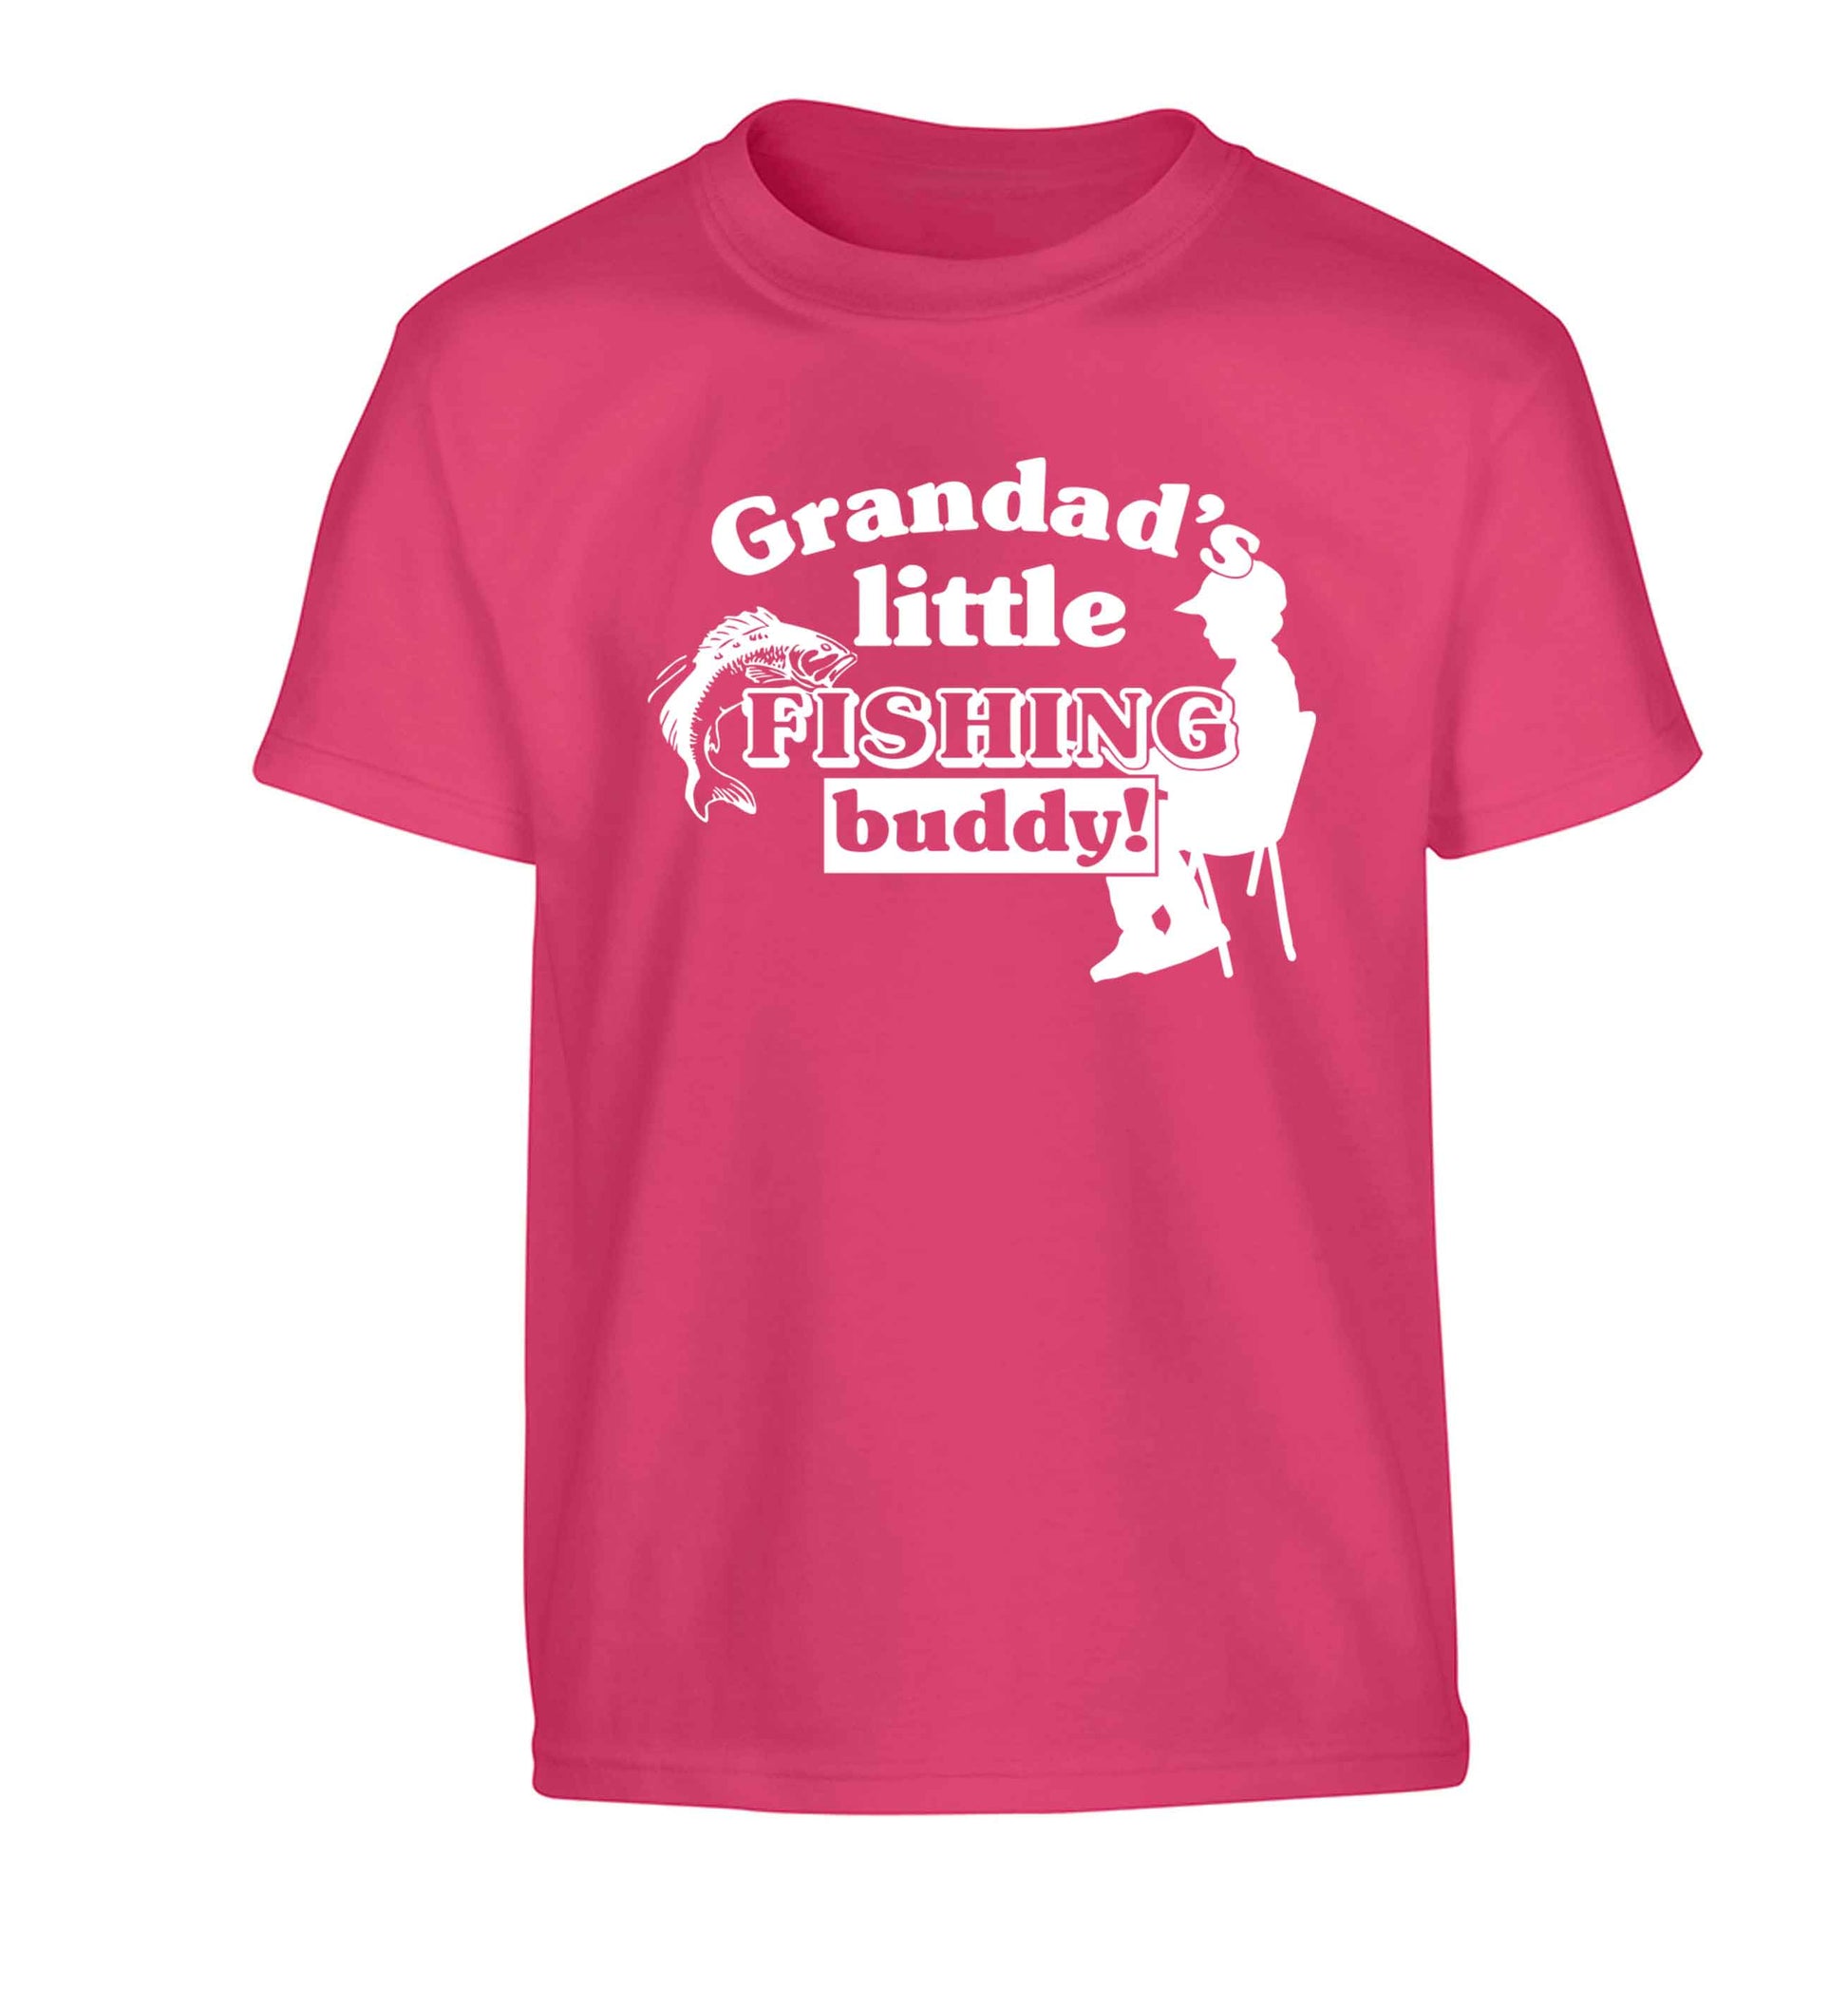 Grandad's little fishing buddy! Children's pink Tshirt 12-13 Years